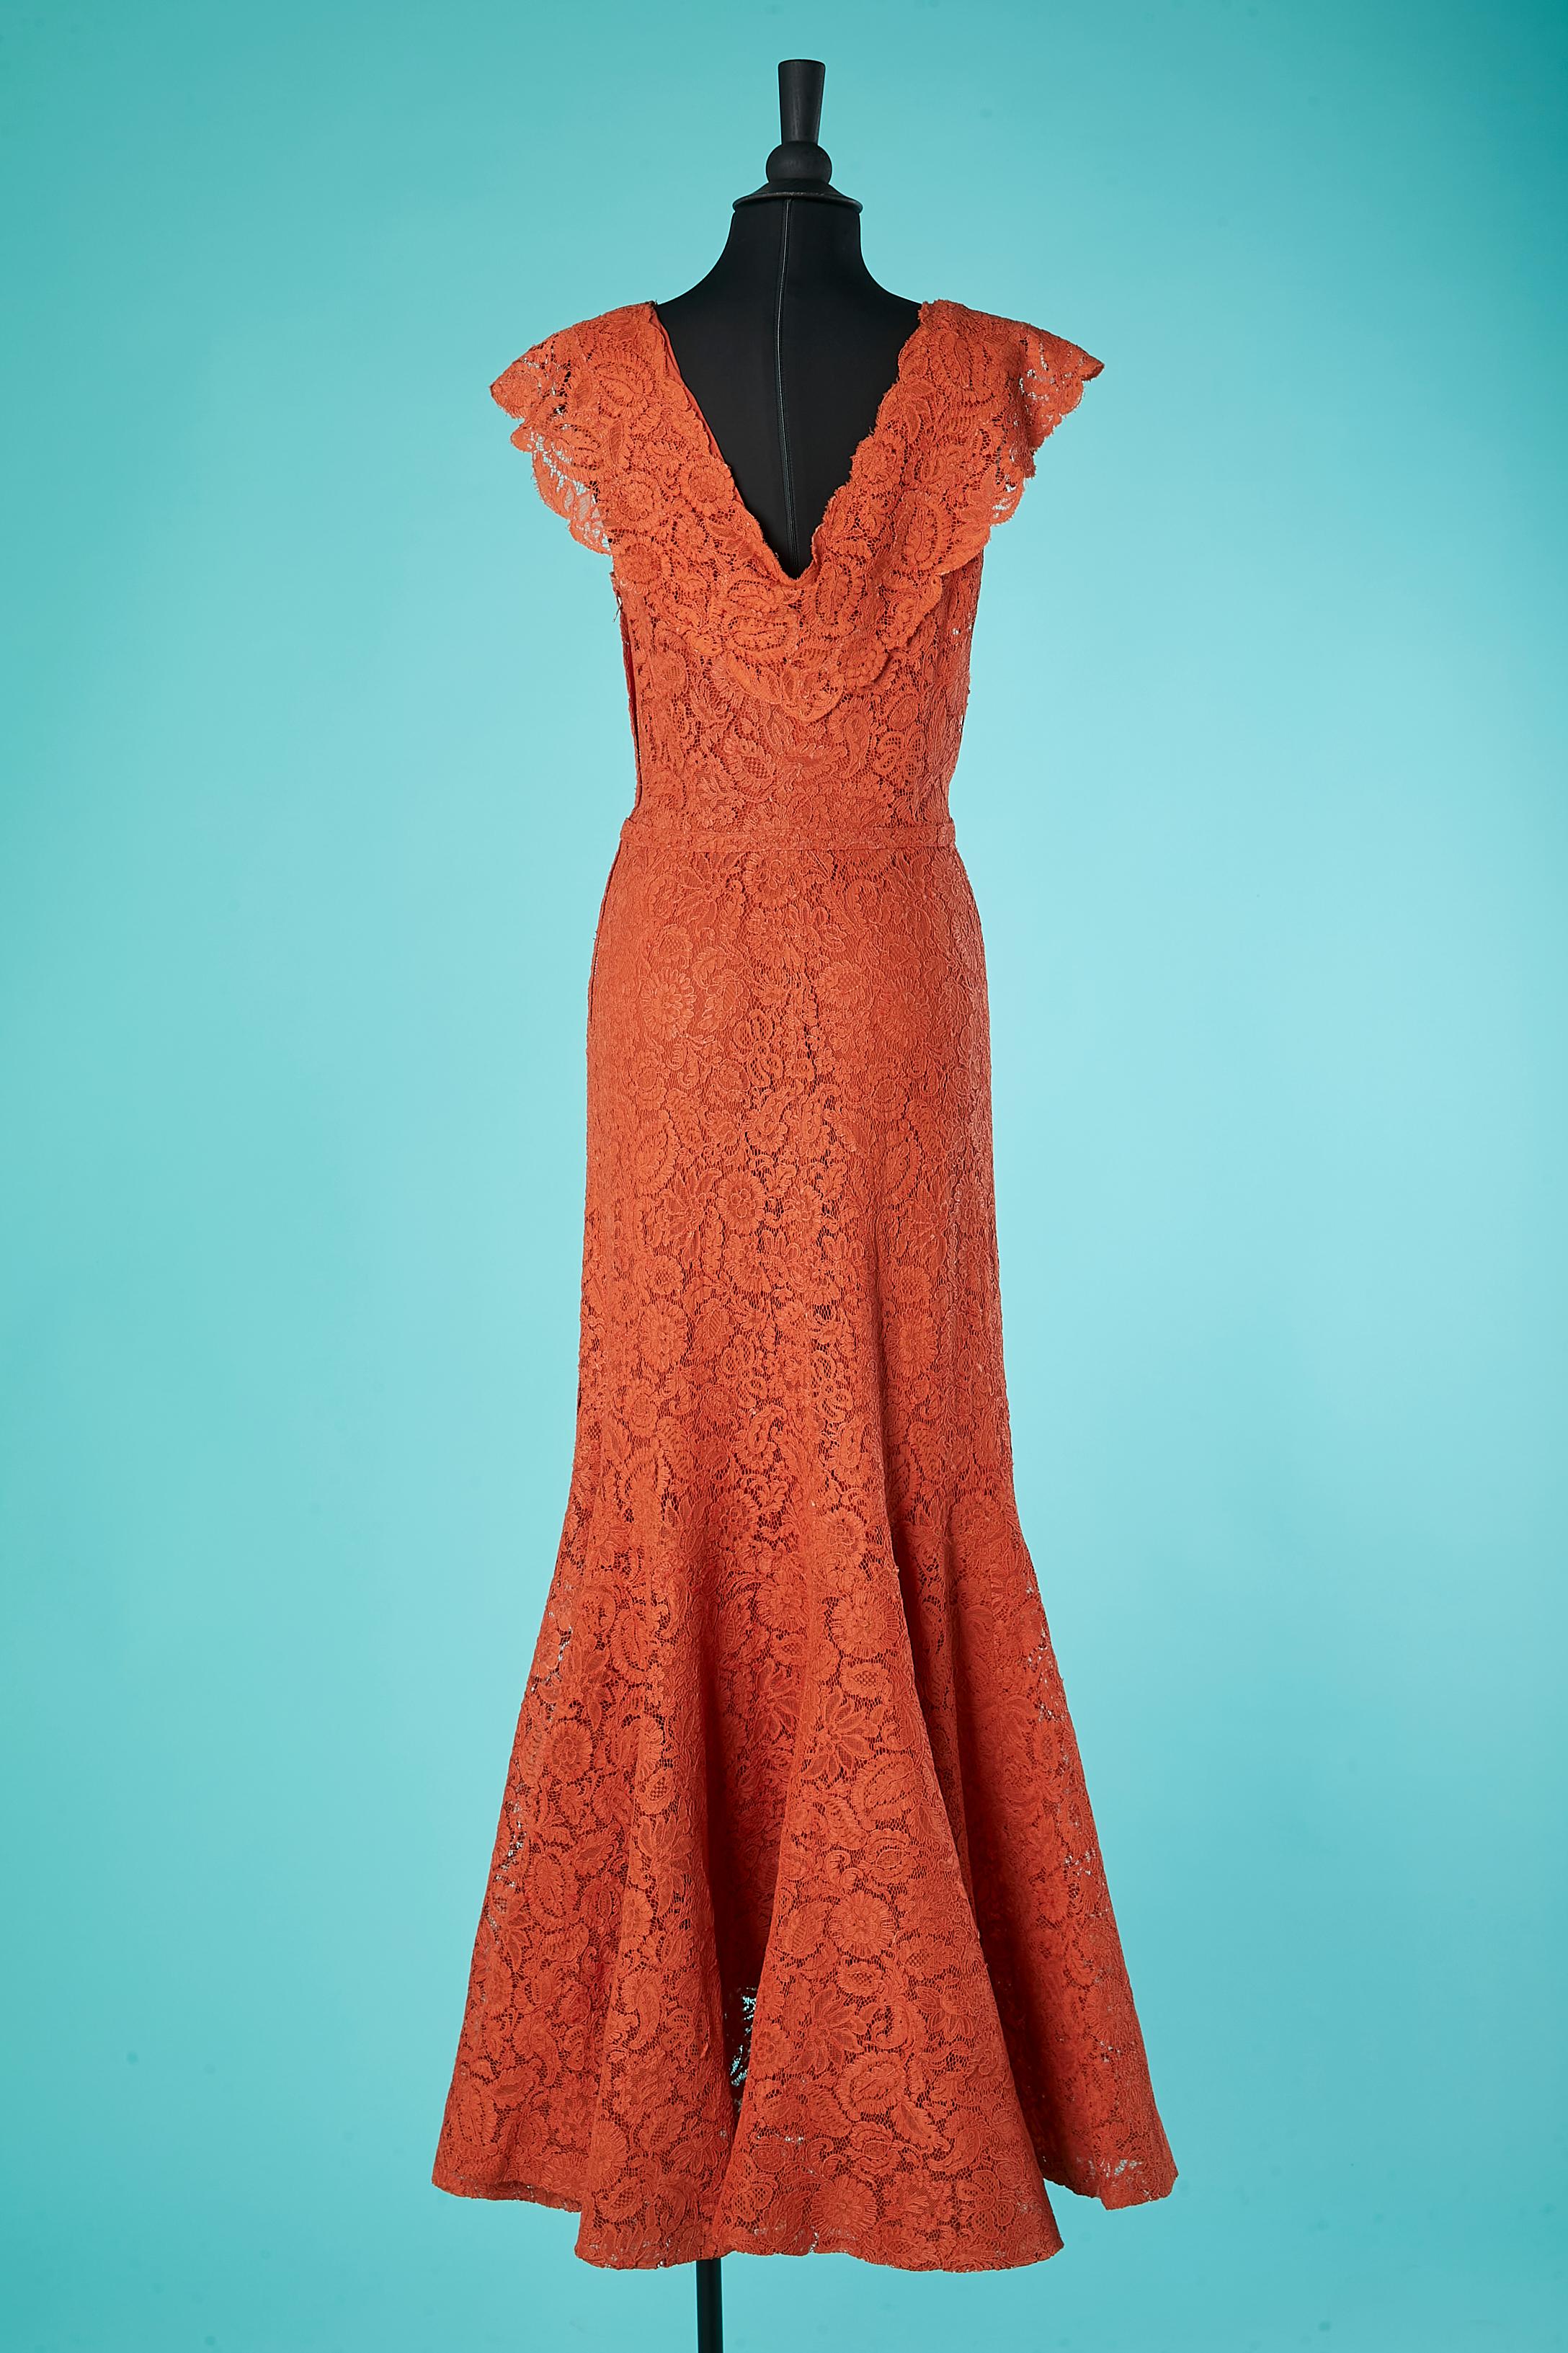 Orange lace evening dress mermaid gown Ballet INC Circa 1950's  For Sale 1